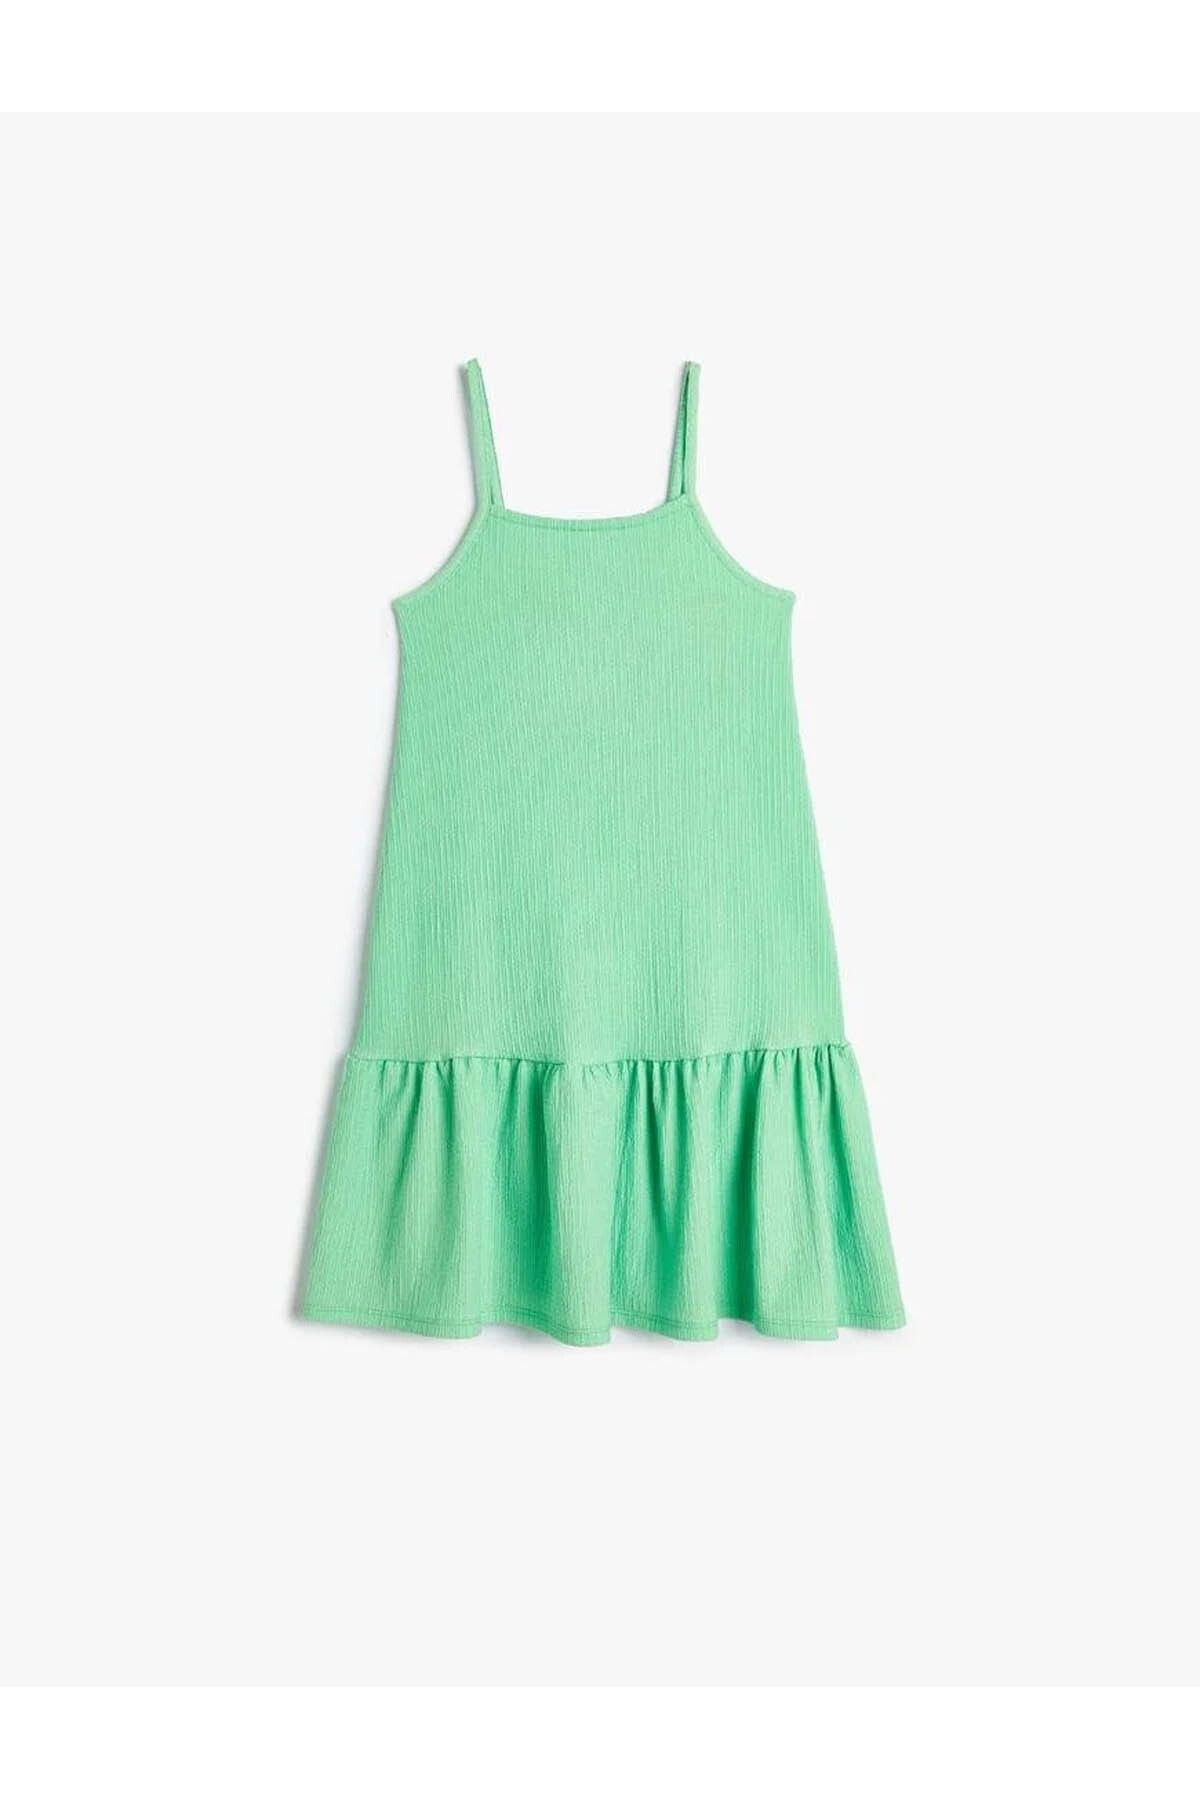 Koton Kadın Elbise Yeşil 4skg80043ak